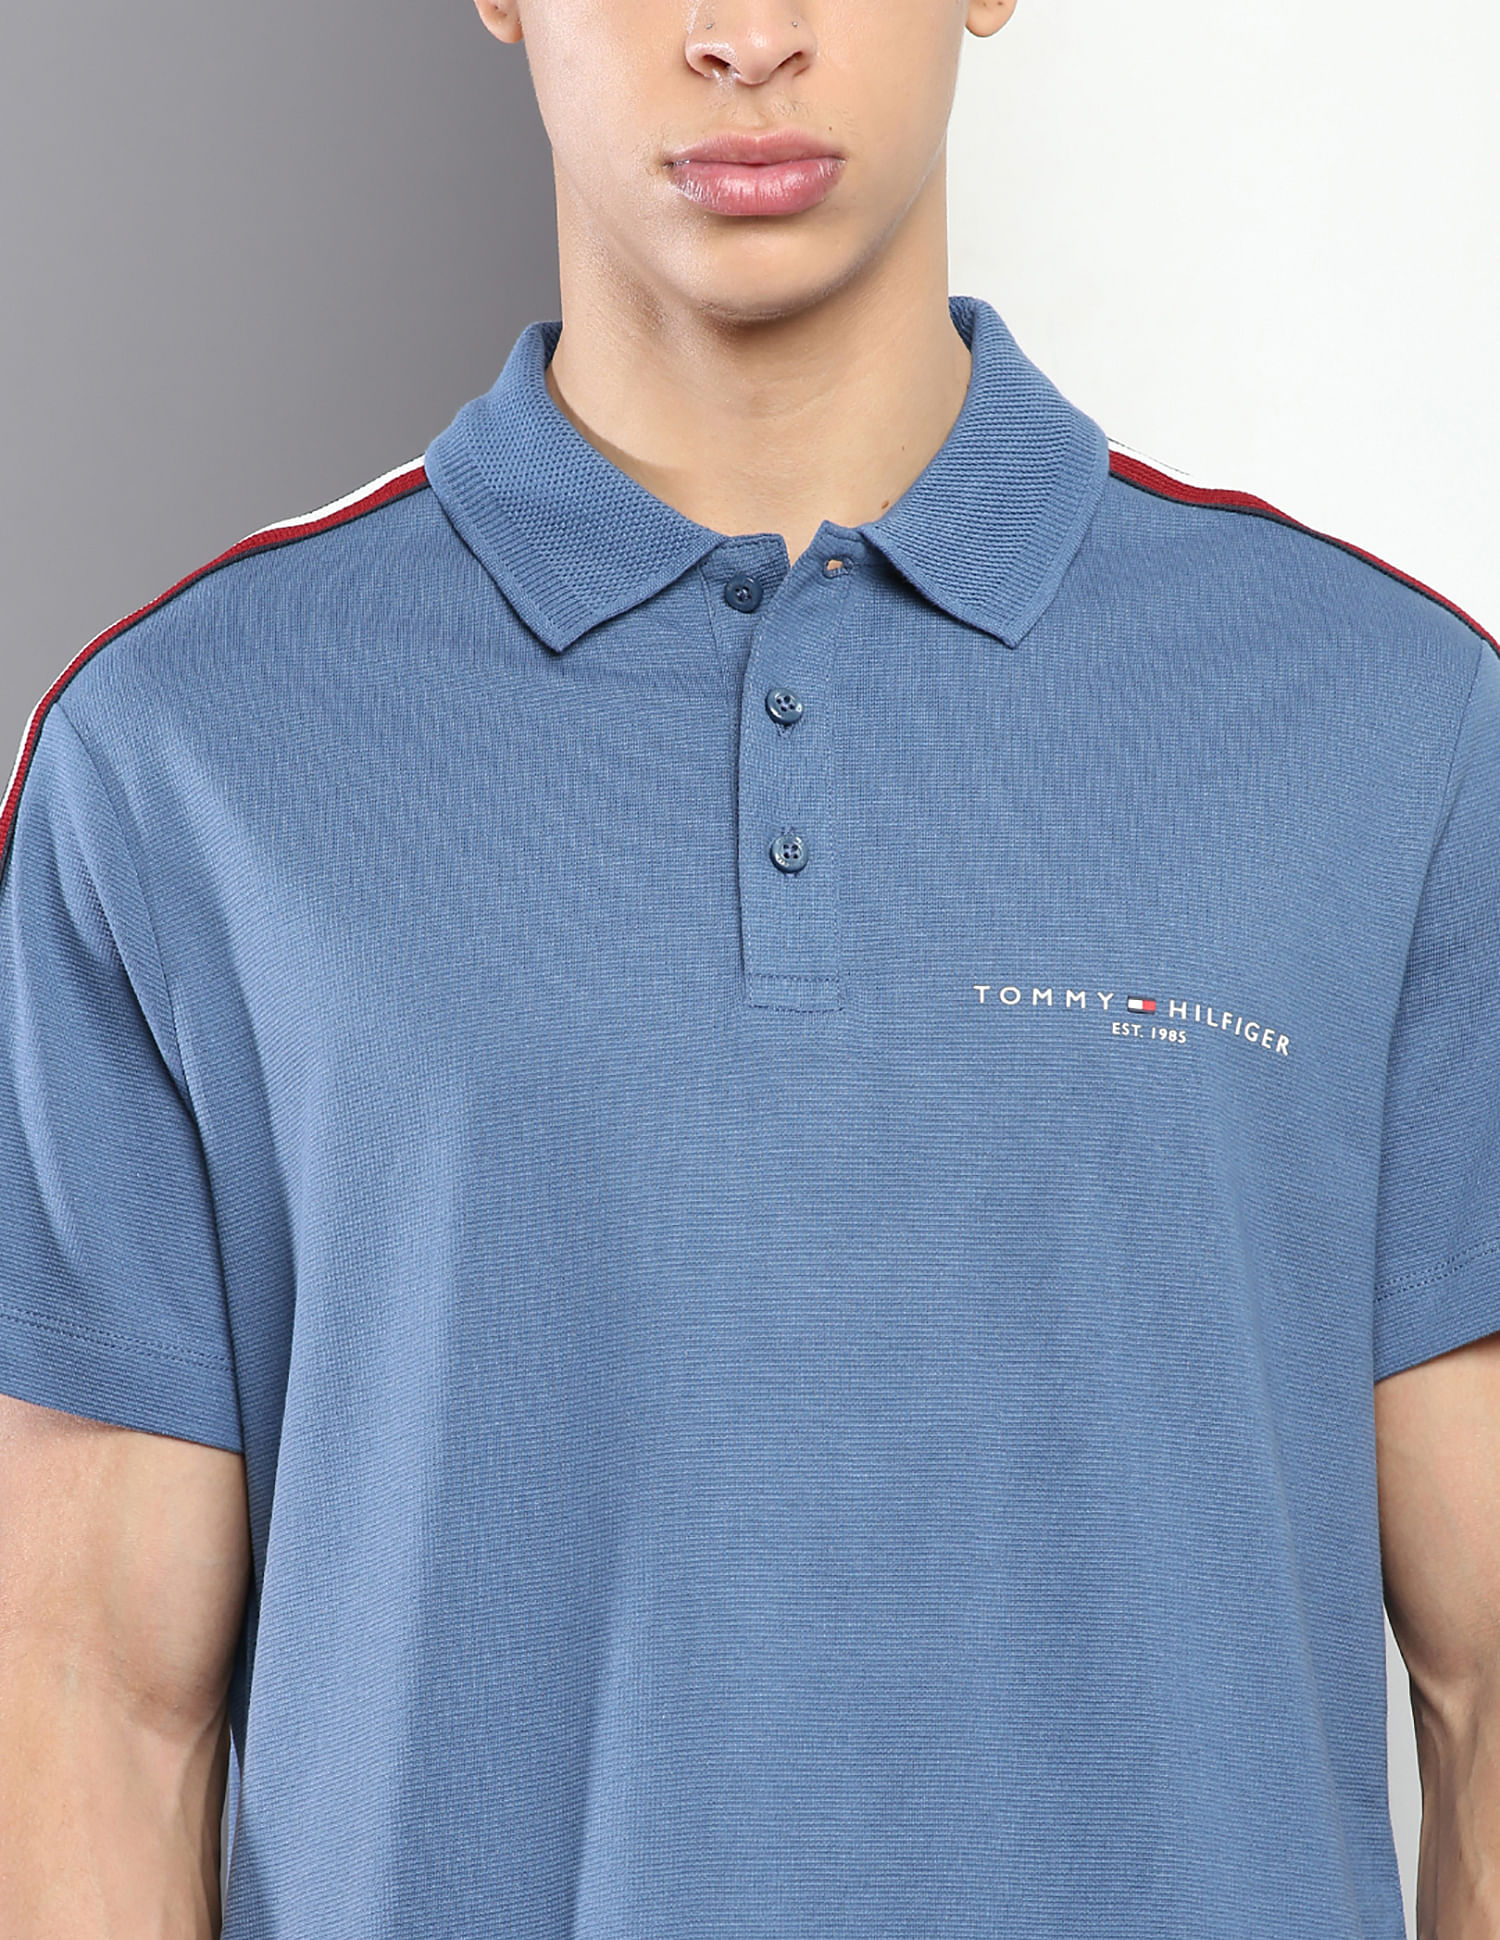 Sleeve Polo Shirt Tommy Cotton Stripe Hilfiger Global Buy